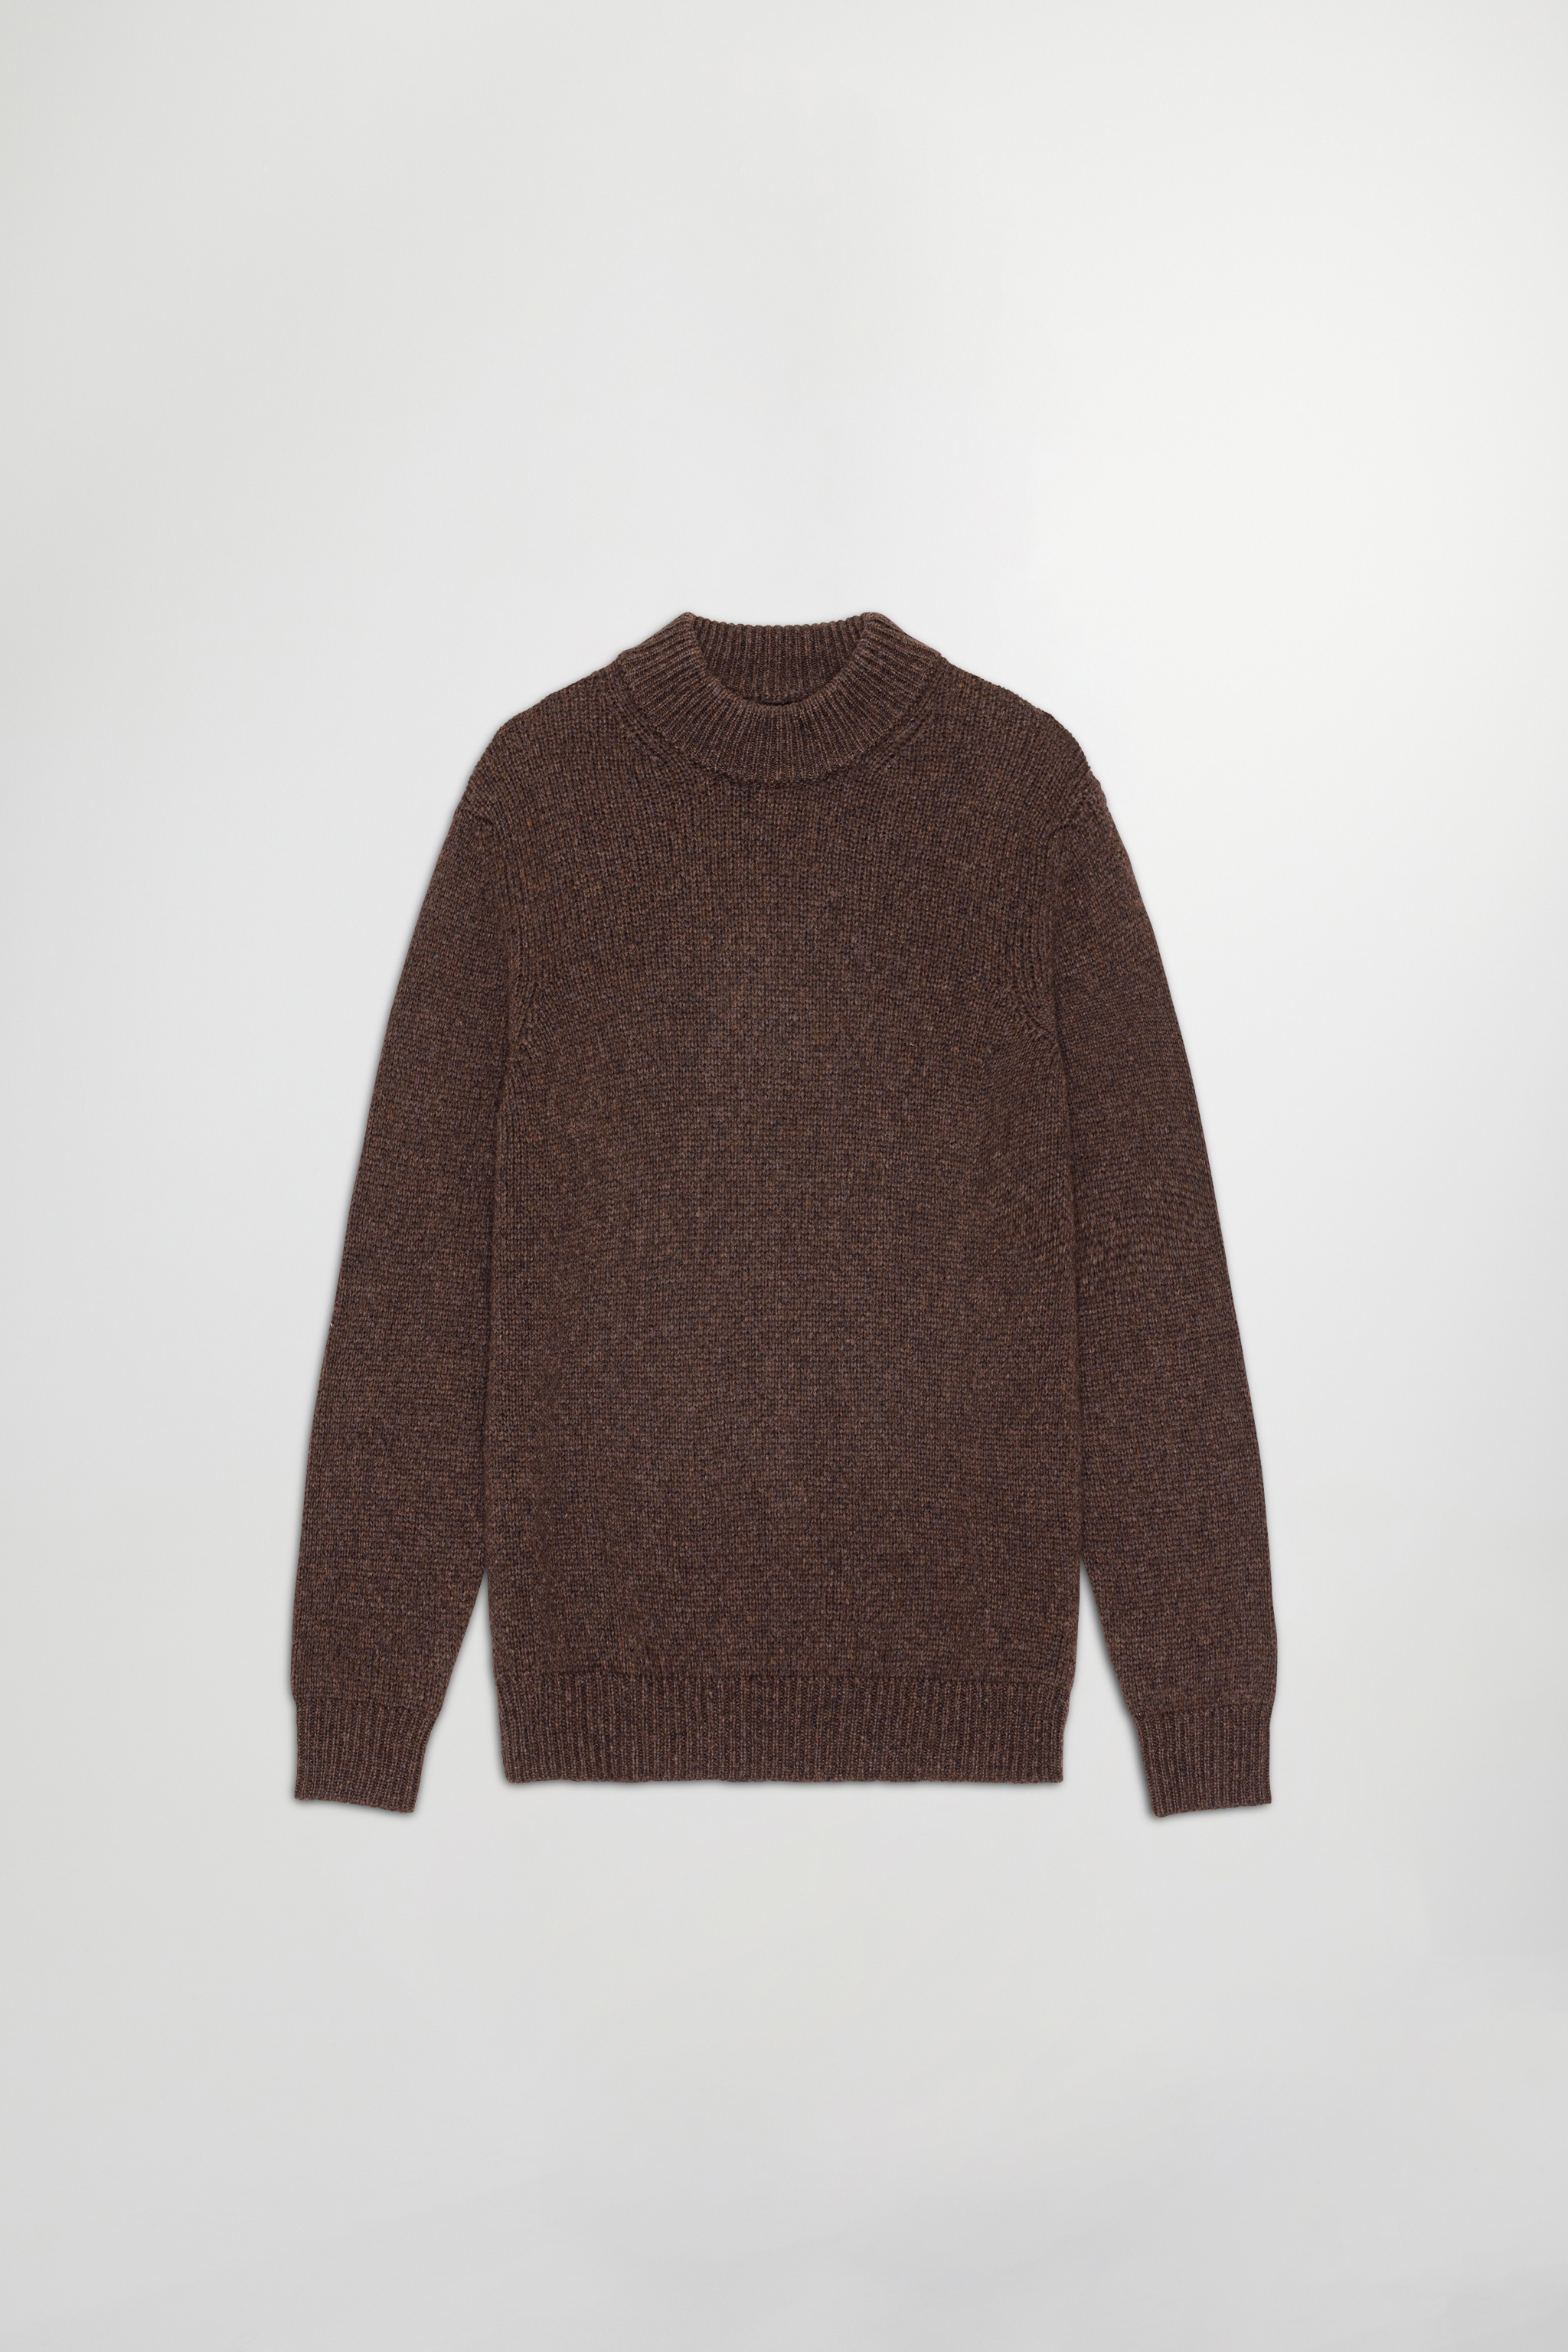 Nick 6367 men's sweater - Brown - Buy online at NN.07®